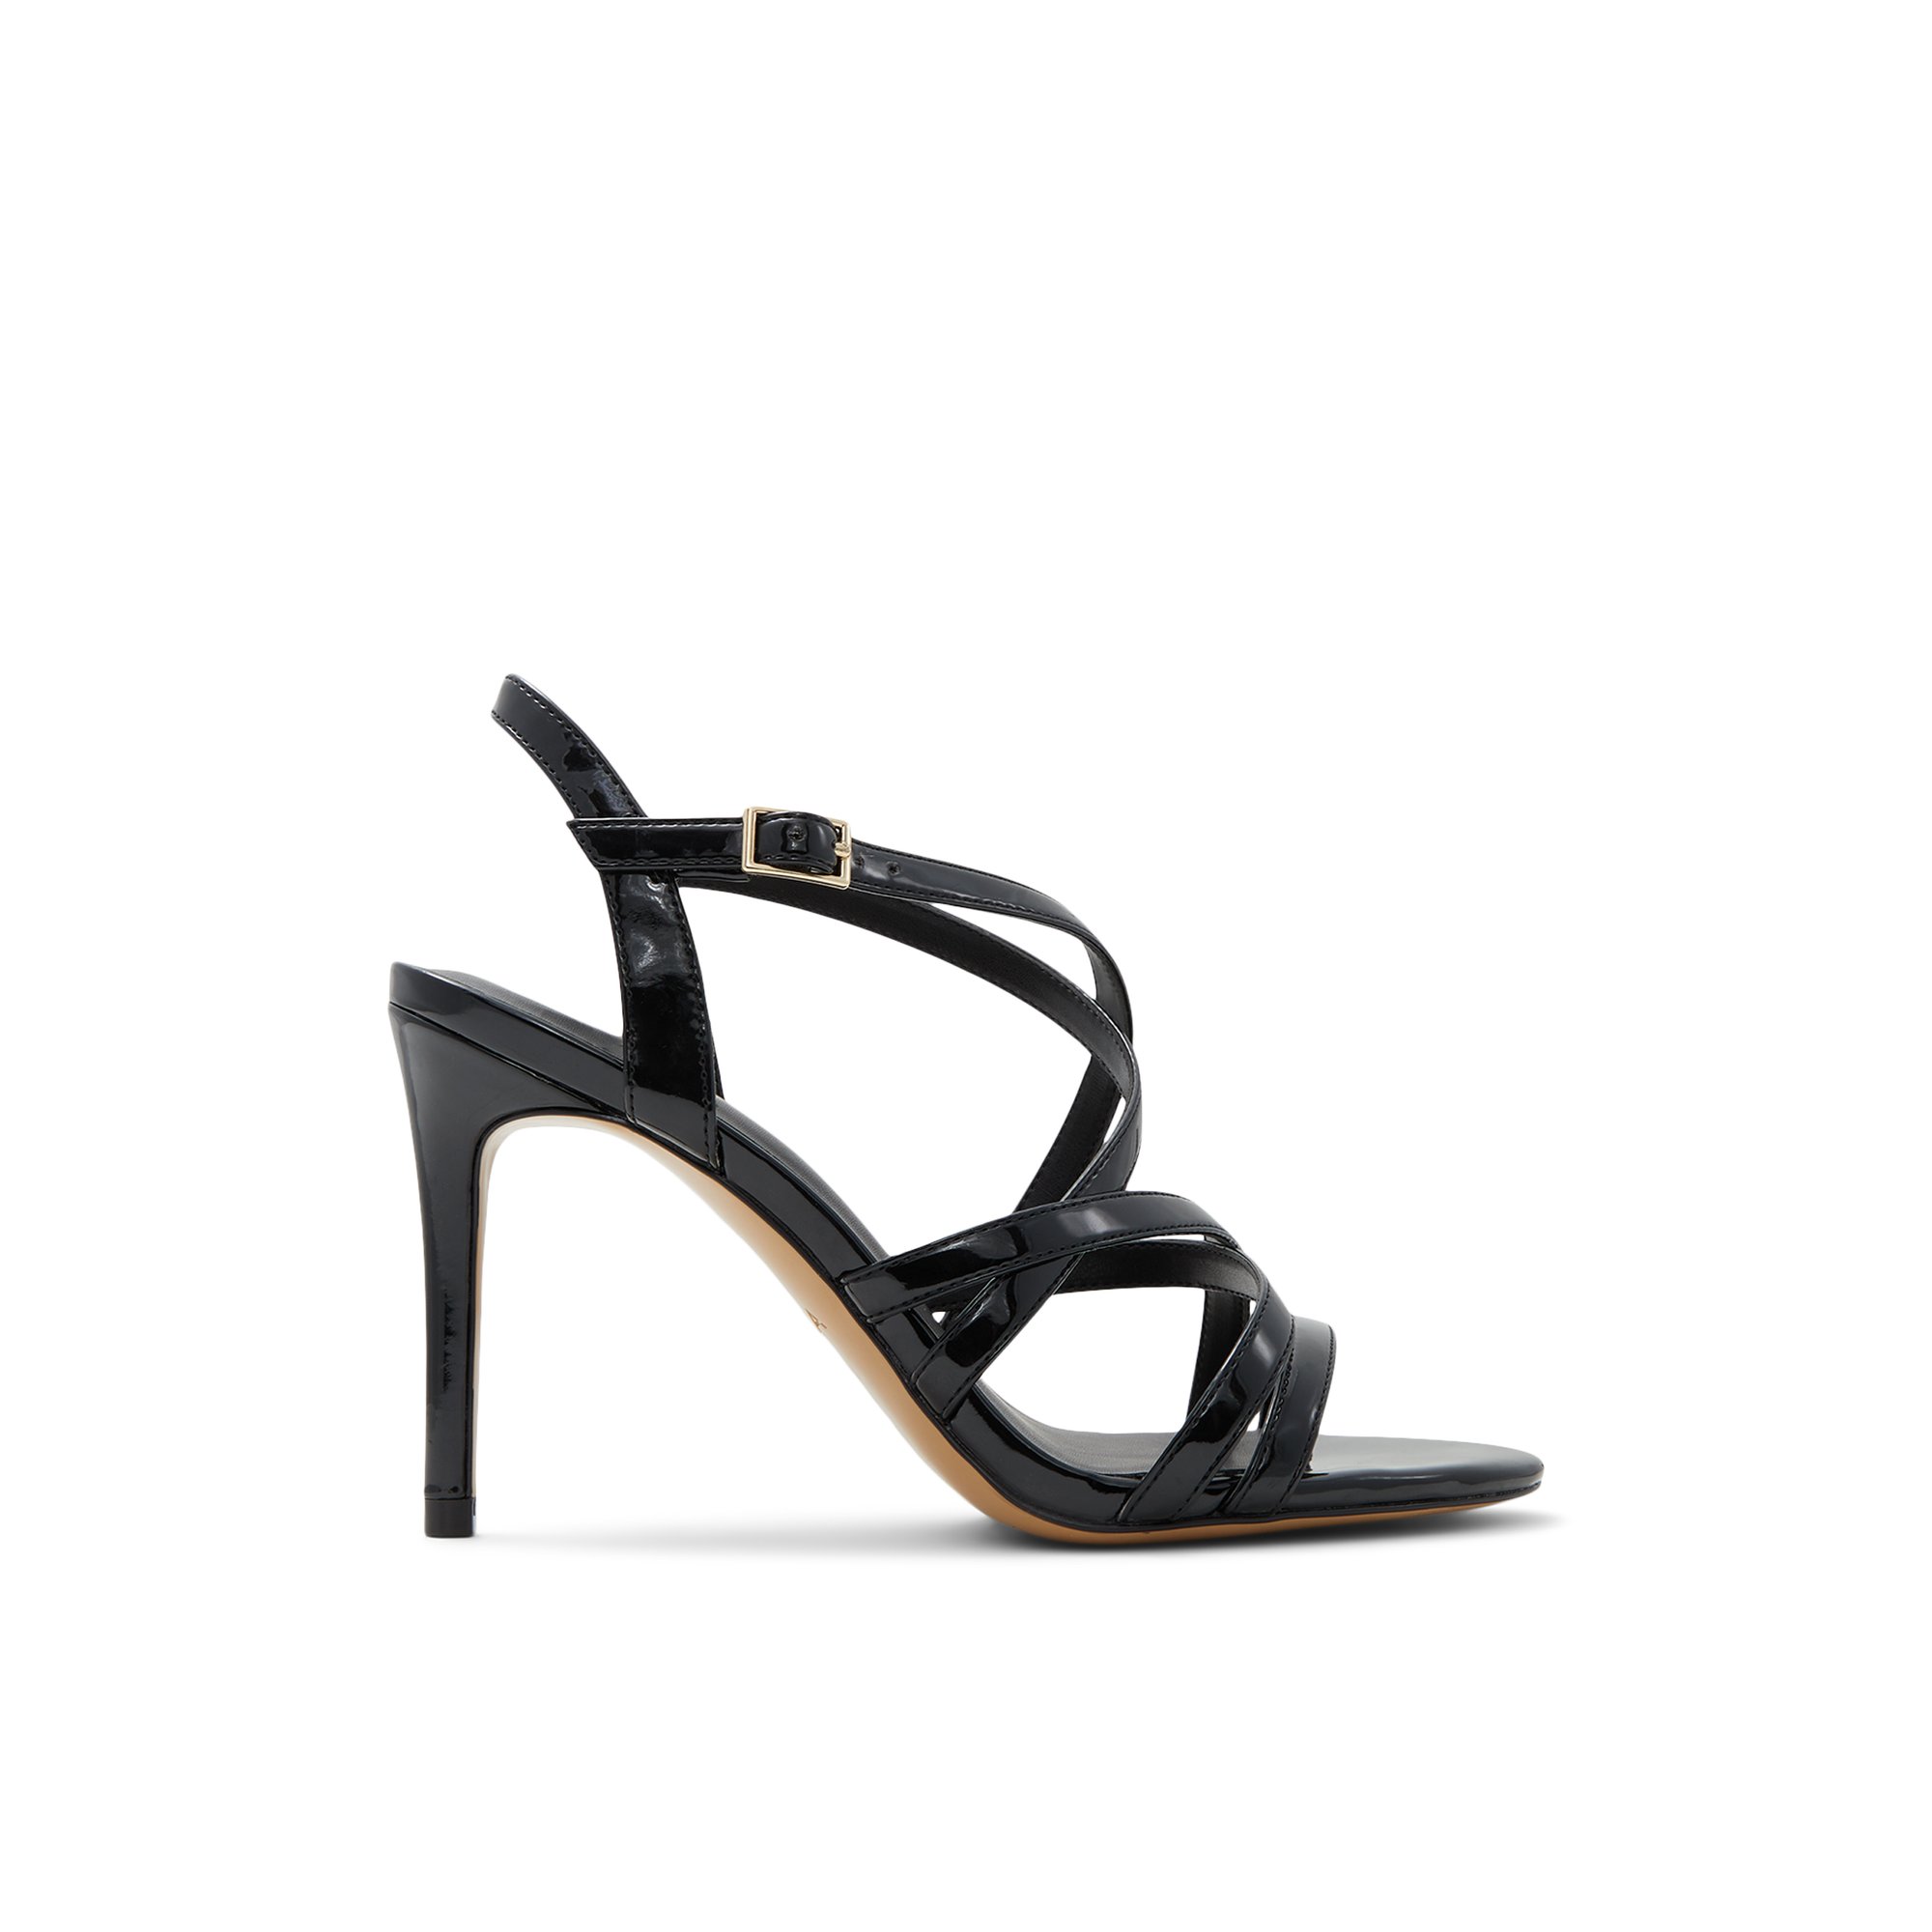 ALDO Katiee - Women's Strappy Sandal Sandals - Black